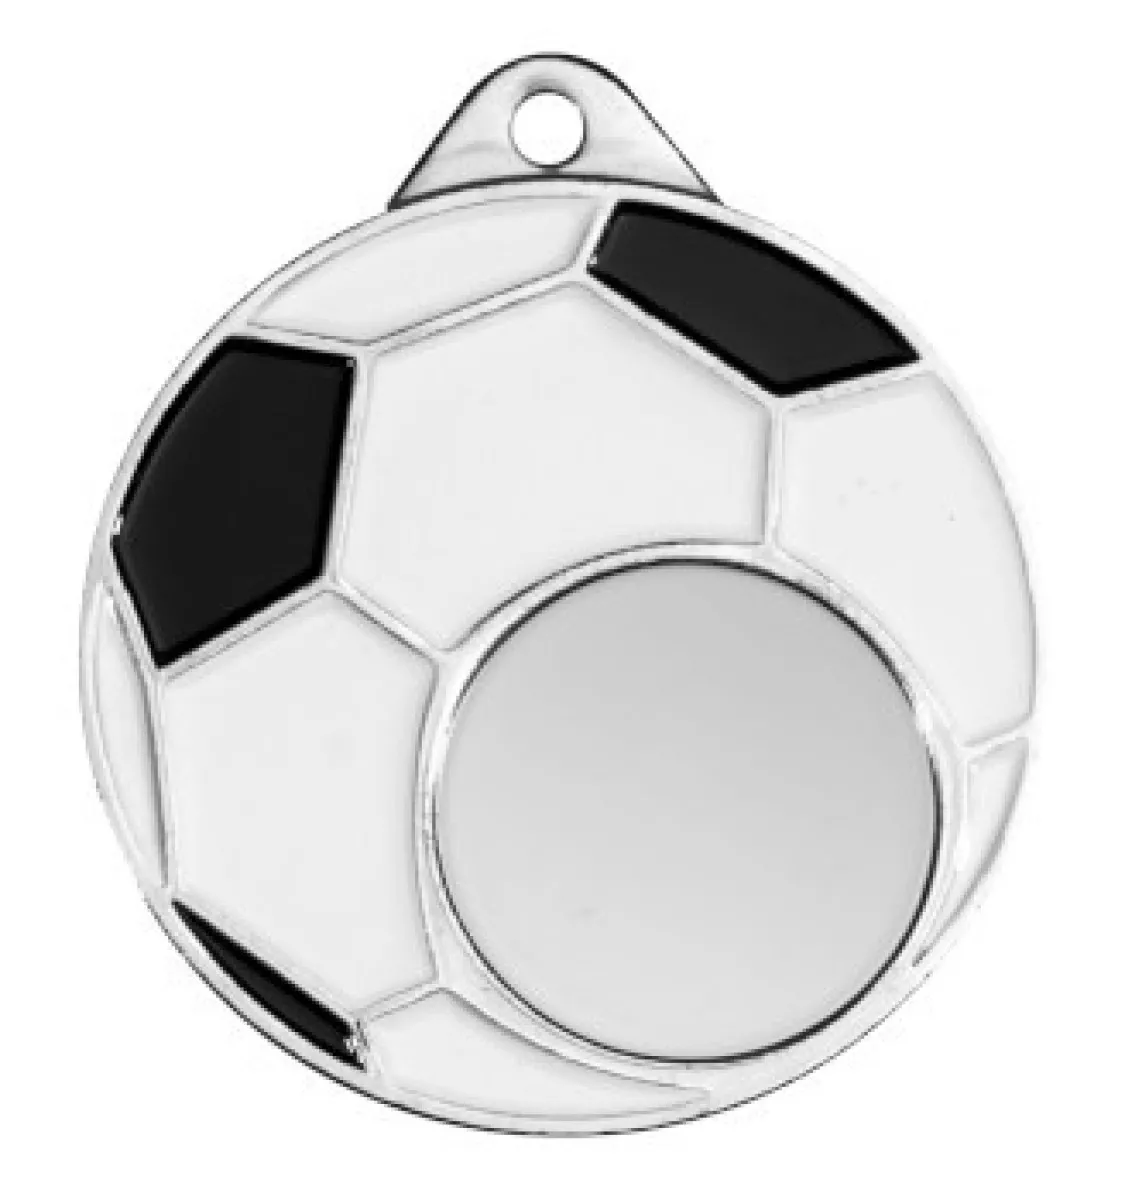 Voetbalmedaille, diameter 50 mm